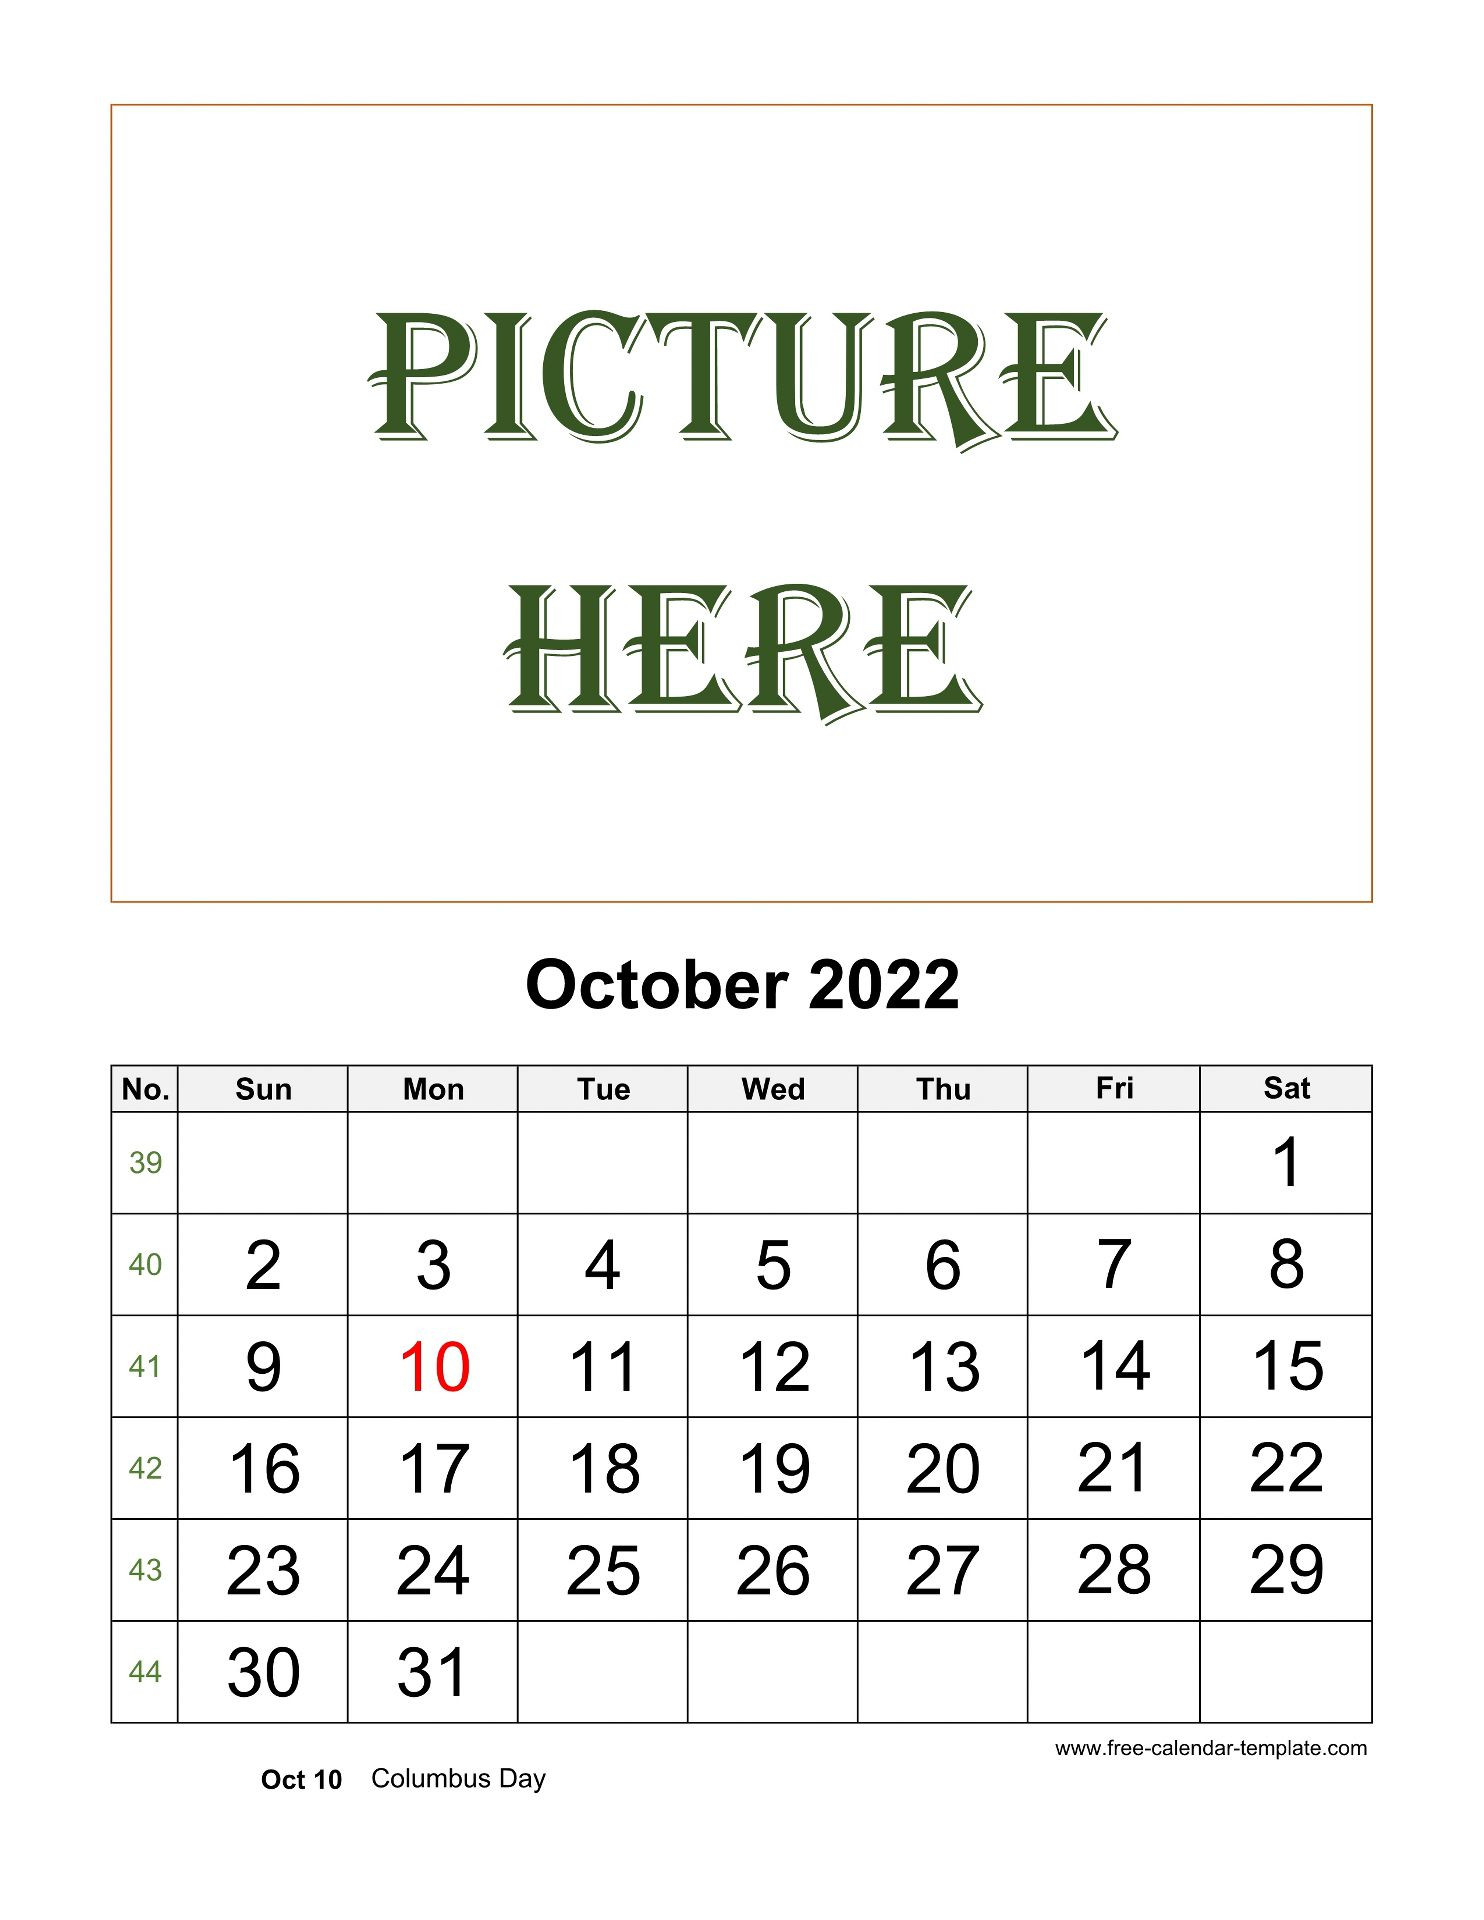 October 2022 Free Calendar Tempplate | Free-Calendar  October 2022 Calendar Printable